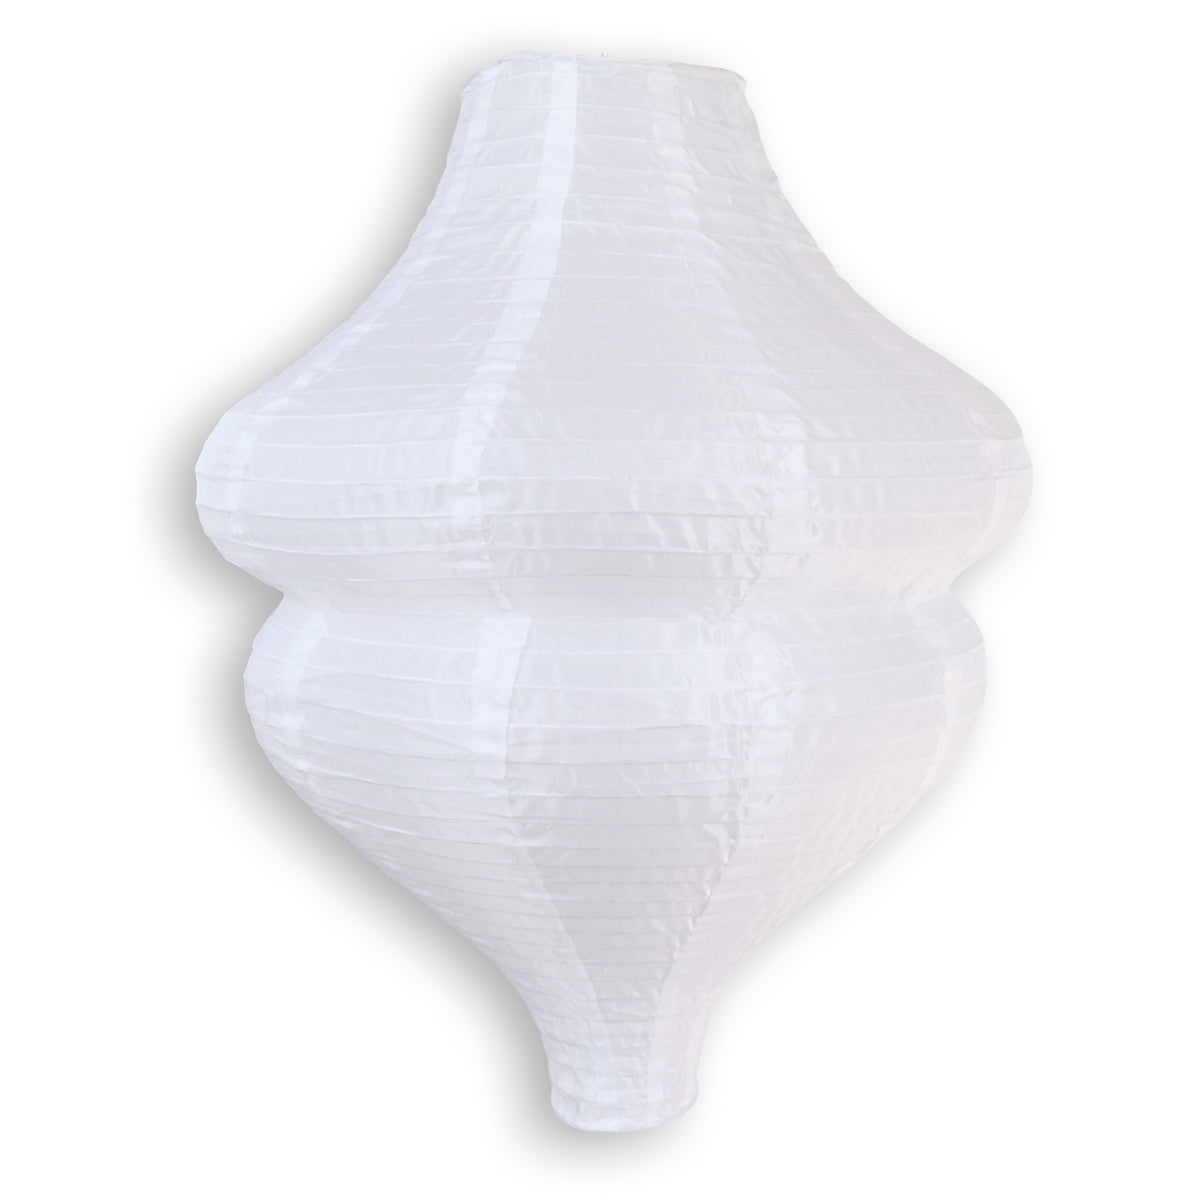 3-PACK | White Beehive Unique Shaped Nylon Lantern, 10-inch x 14-inch - PaperLanternStore.com - Paper Lanterns, Decor, Party Lights & More